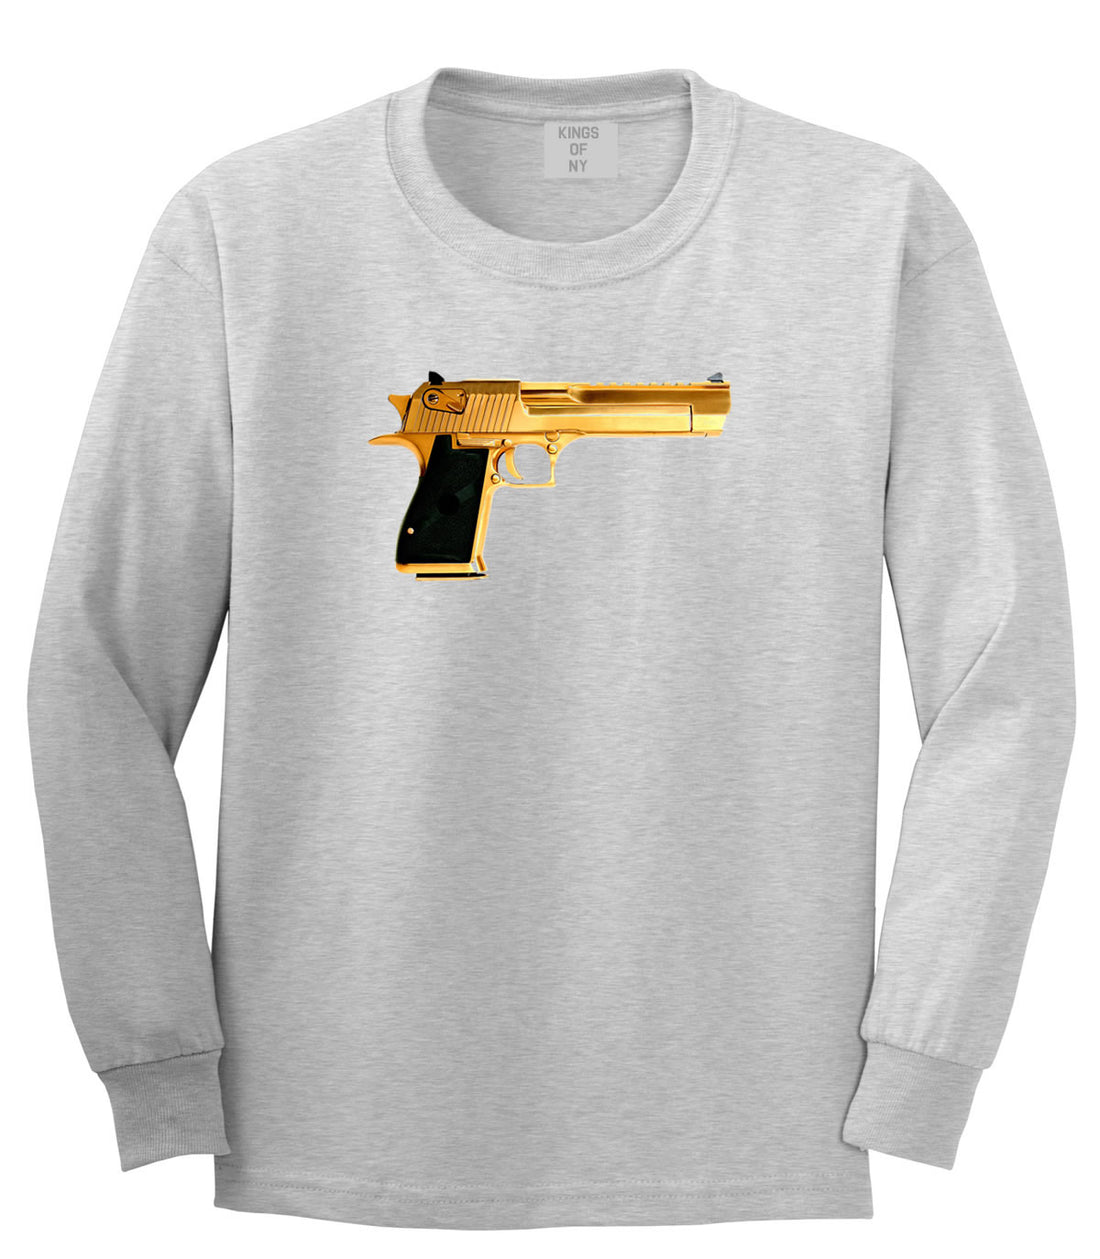 Gold Gun 9mm Revolver Chrome 45 Long Sleeve Boys Kids T-Shirt In Grey by Kings Of NY